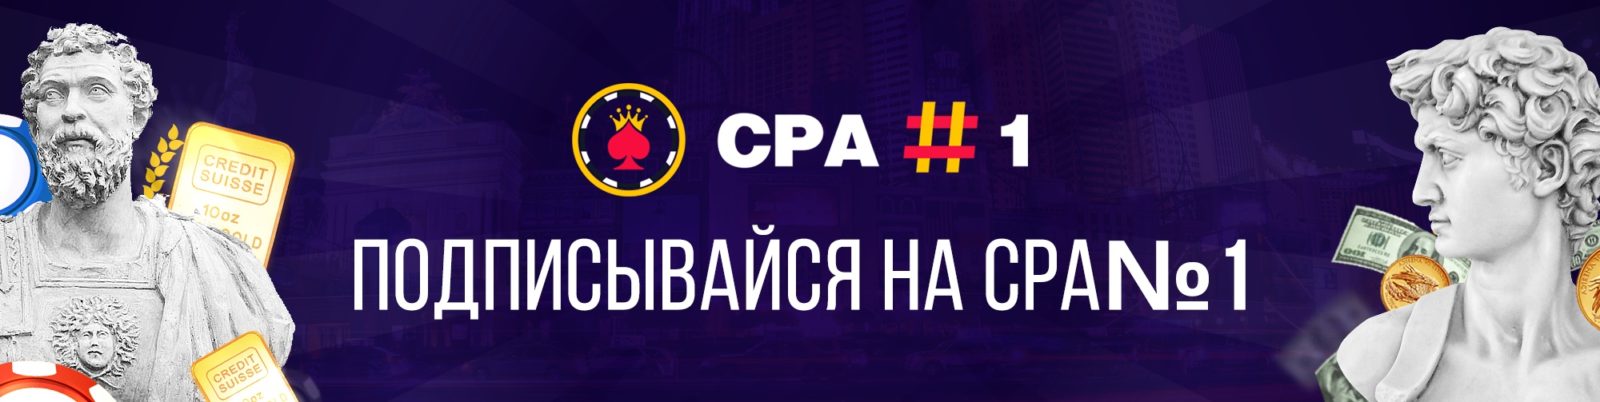 Cpa 1 ru. CPA#1. Cpanomer1. CPA#1 логотип.